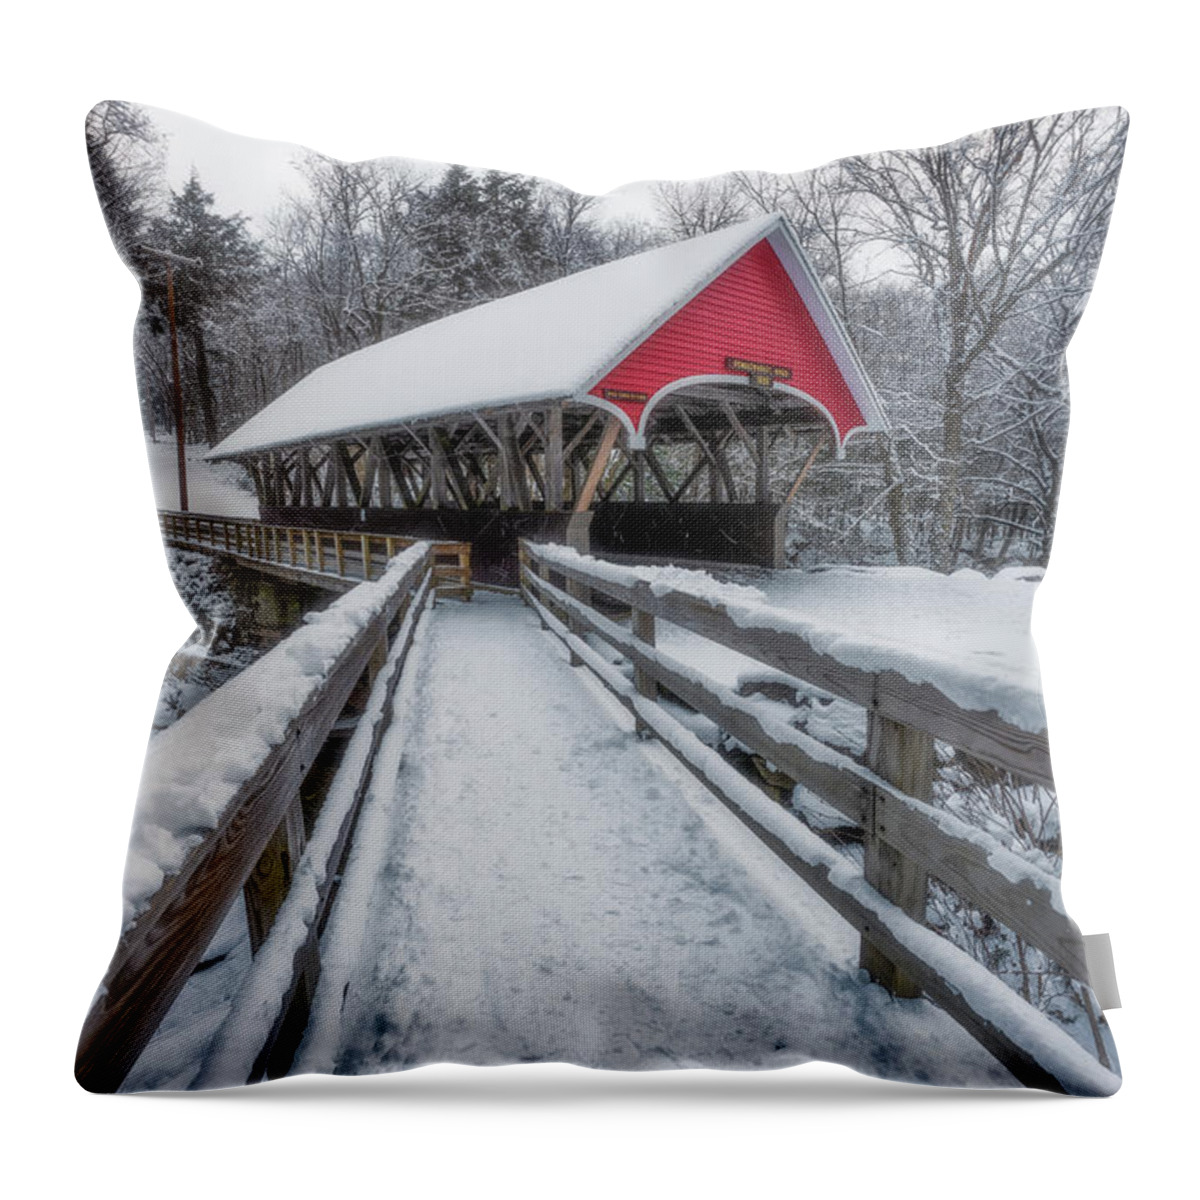 Pemigewasset Covered Bridge Throw Pillow featuring the photograph Pemigewasset Covered Bridge by Darren White